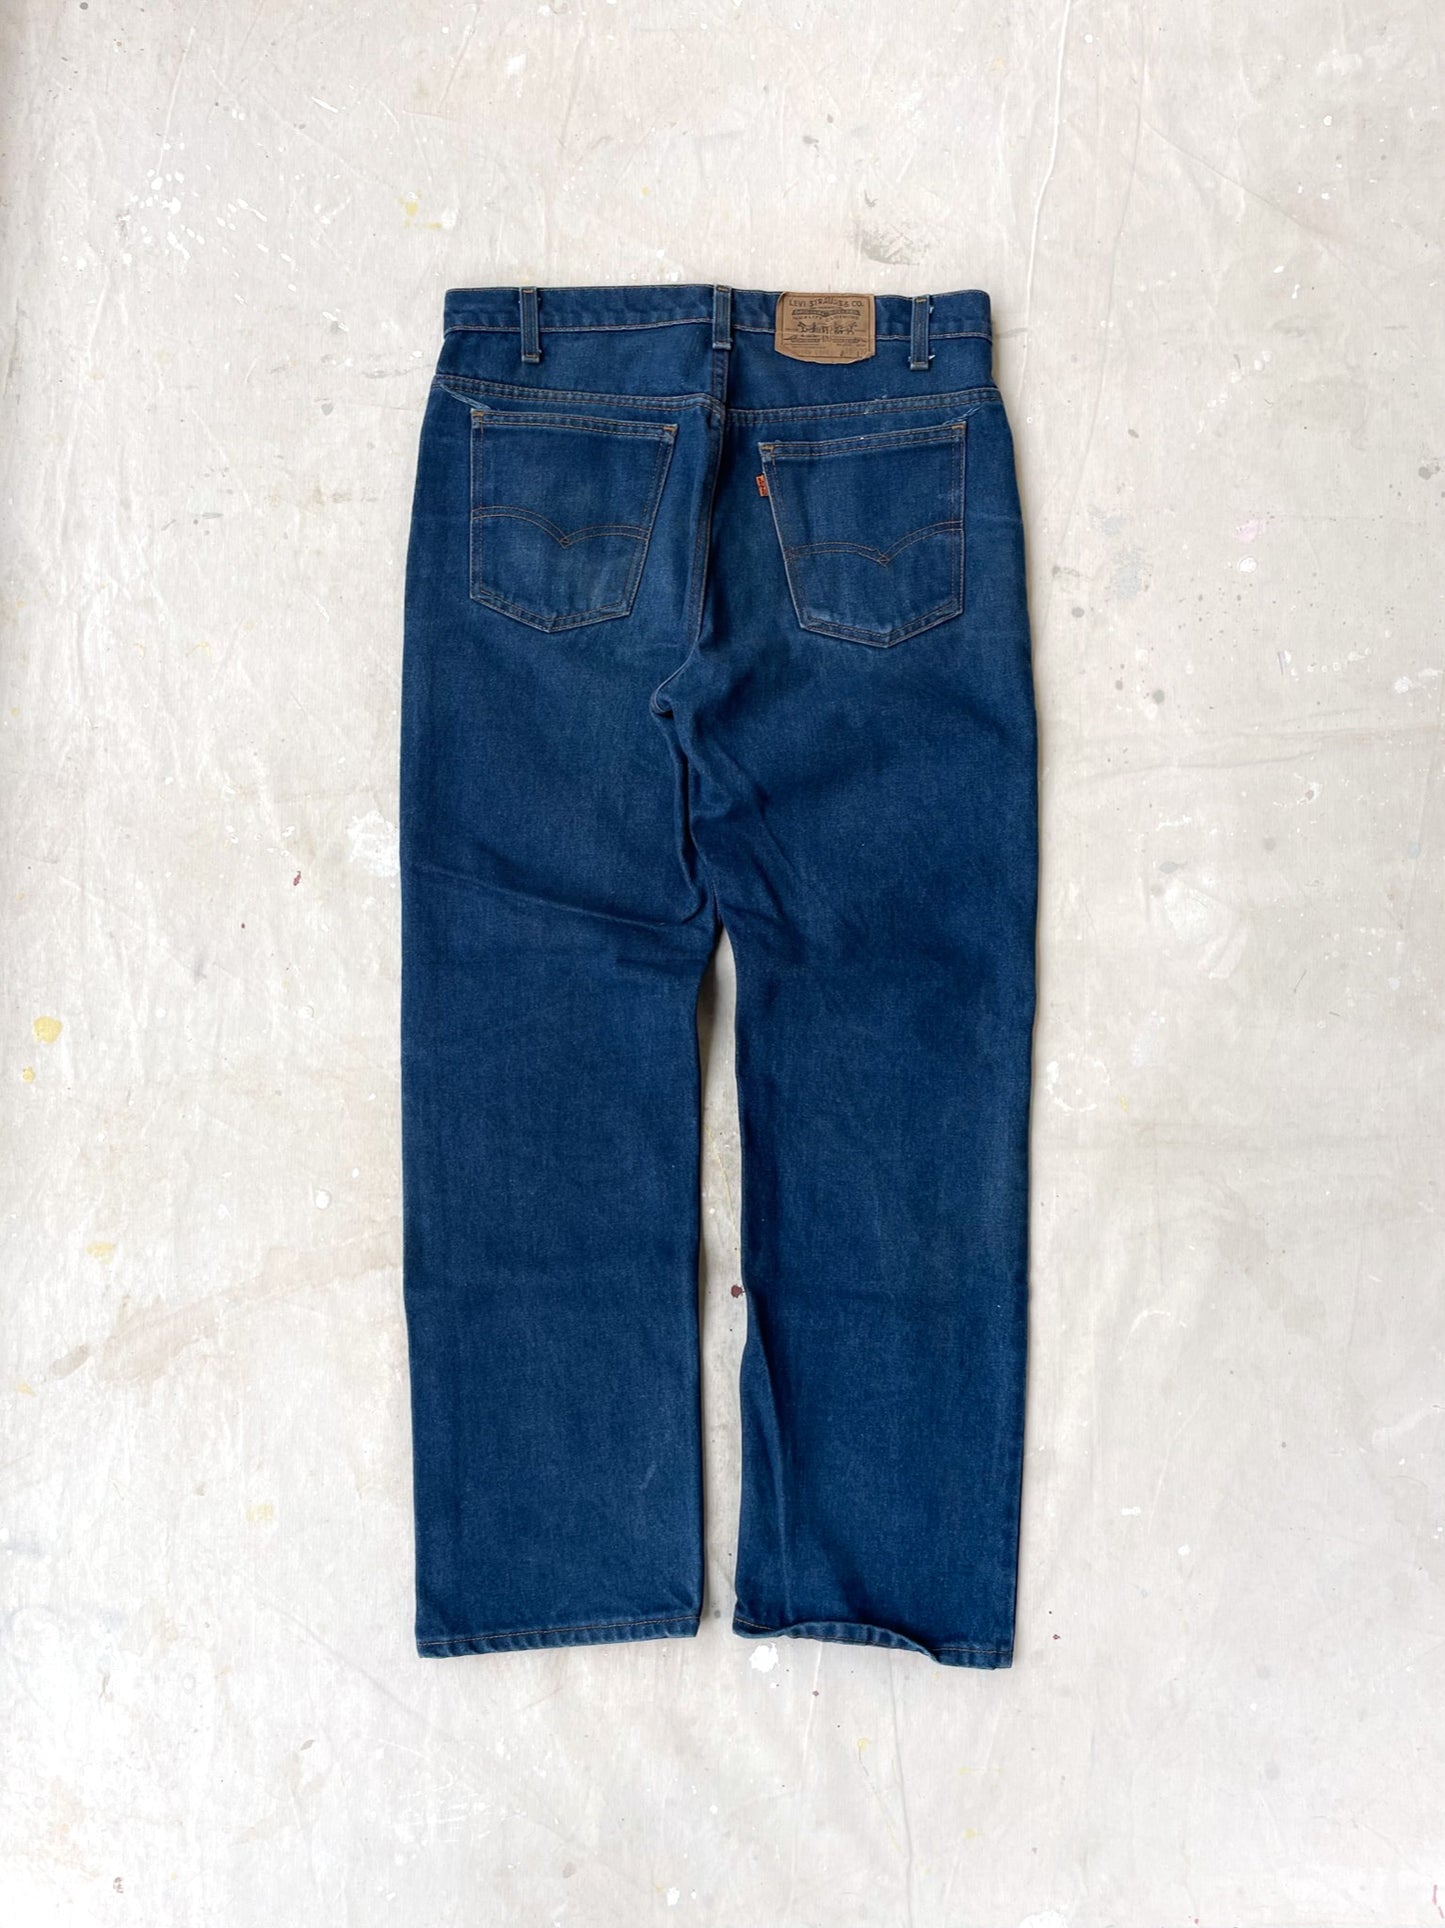 Levi's 508 Orange Tab Jeans—[35x32]